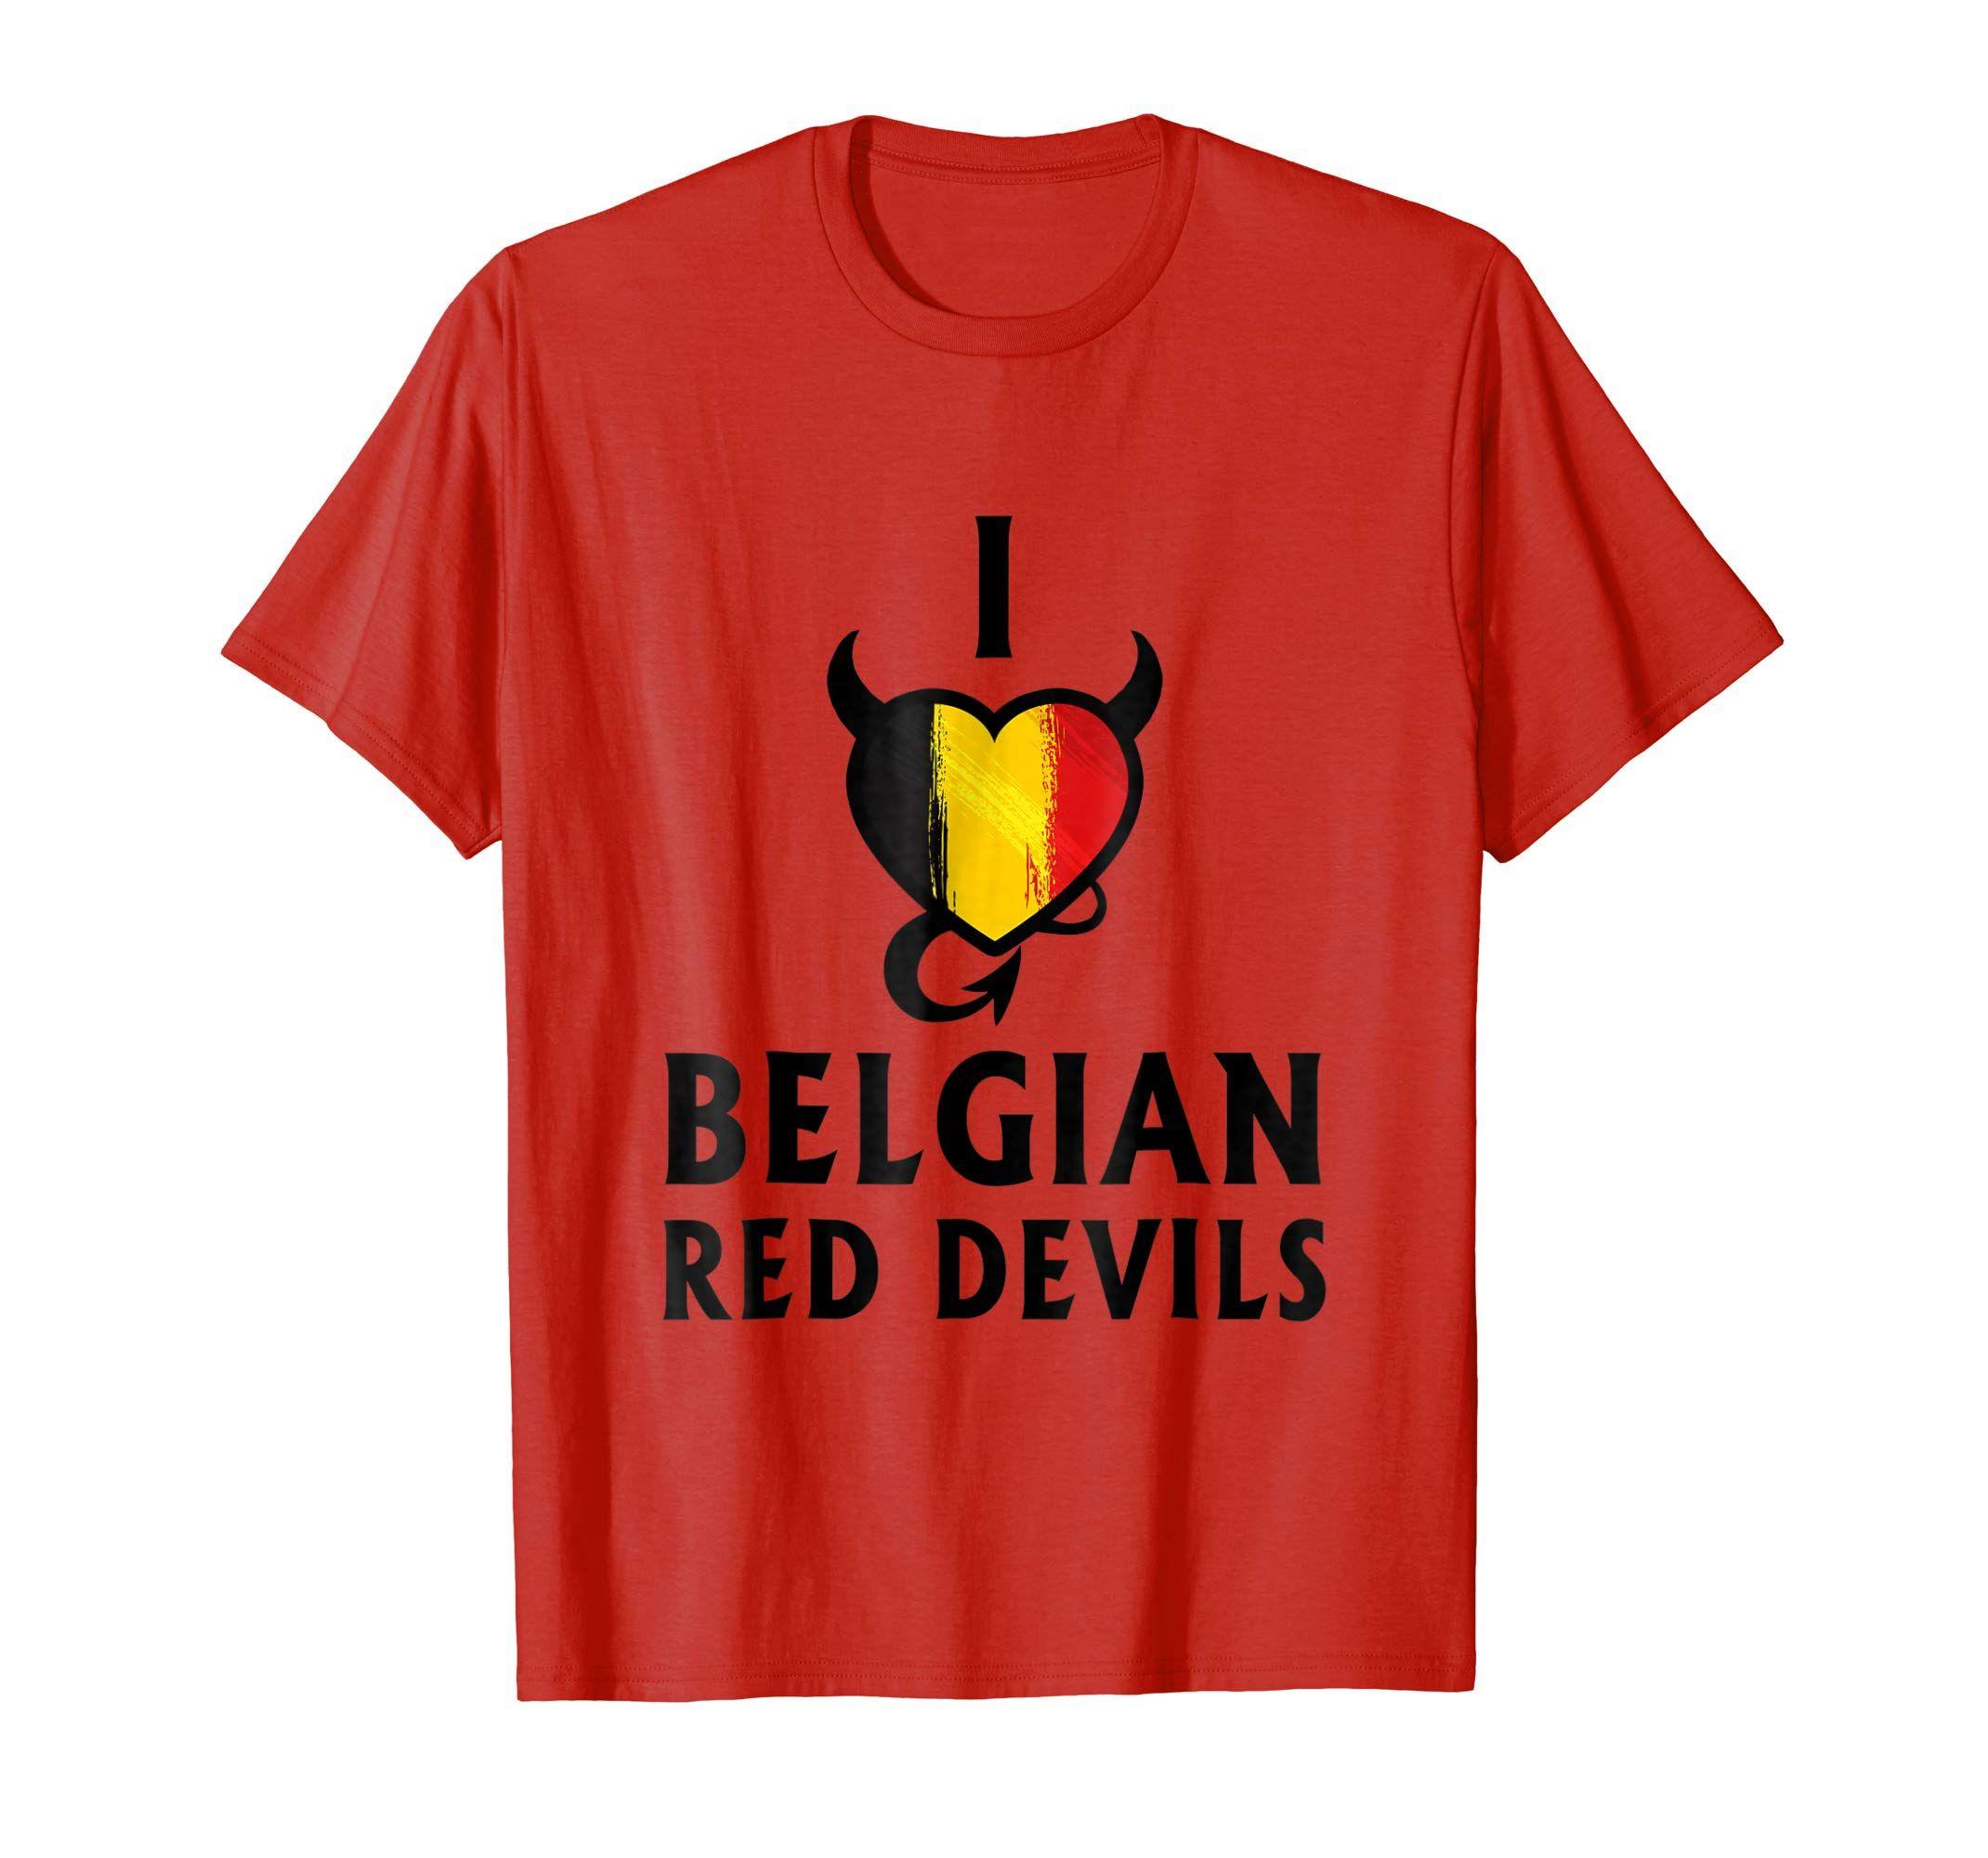 Red Devils Soccer Logo - Amazon.com: i love Belgian red devils soccer 2018: Clothing